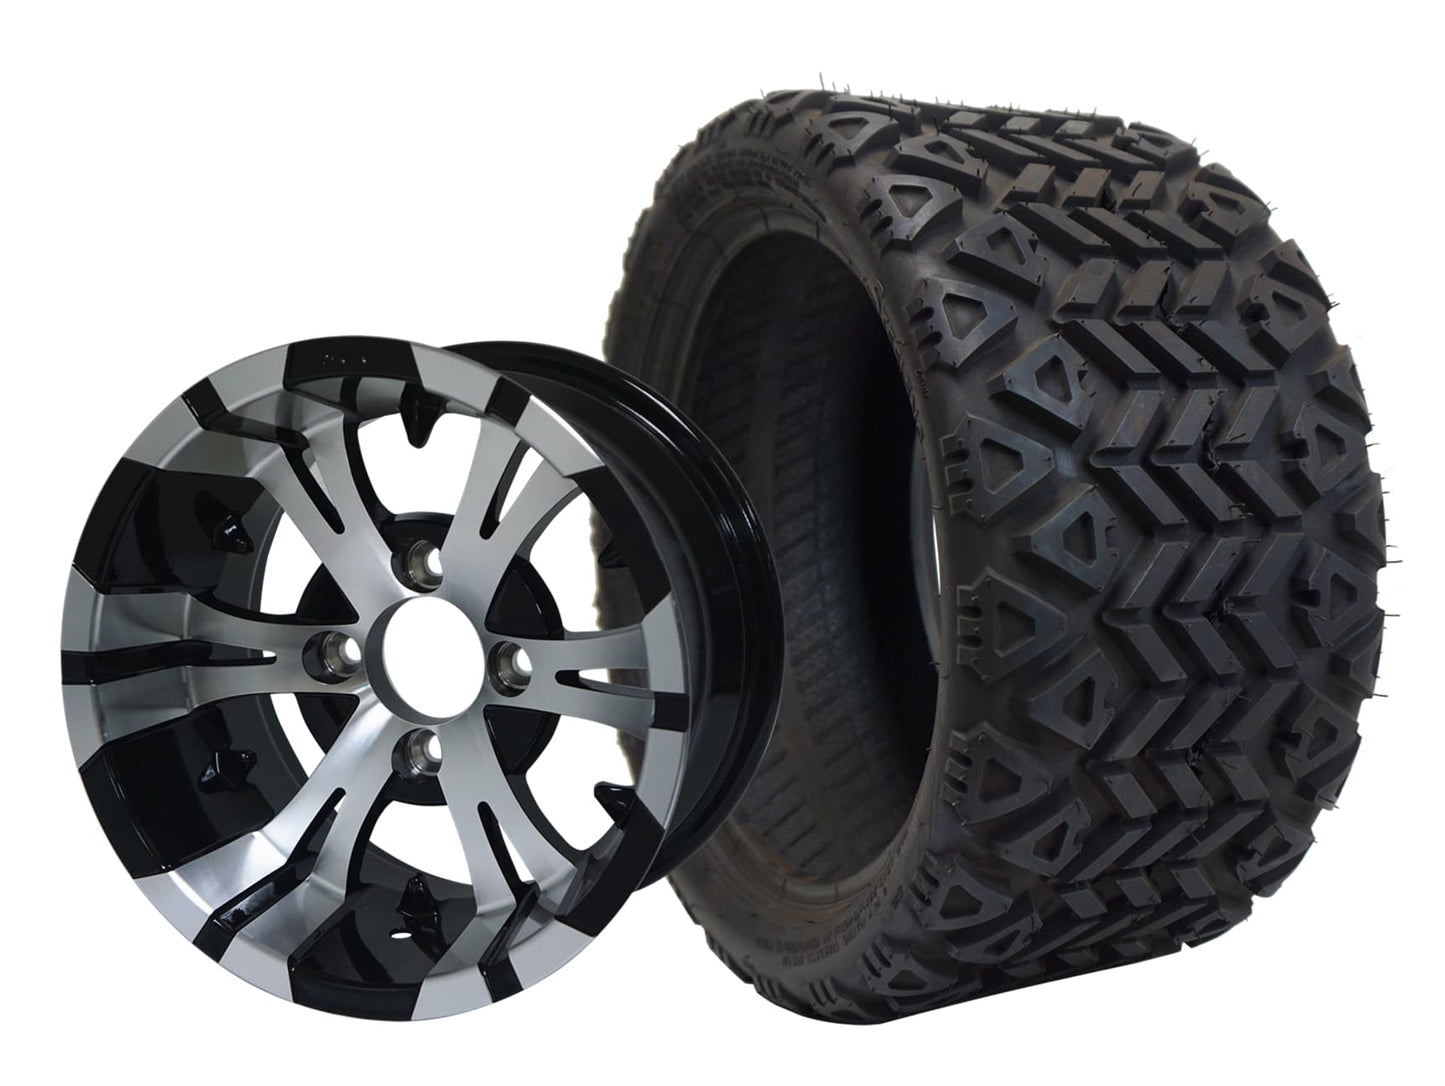 BNDL-TR1207-WH1245-LN0001-CC0001 – SGC 12″ Vampire Machined Black Wheel – Aluminum Alloy / STEELENG 20″x10″-12″ All Terrain Tire DOT approved - Set of 4